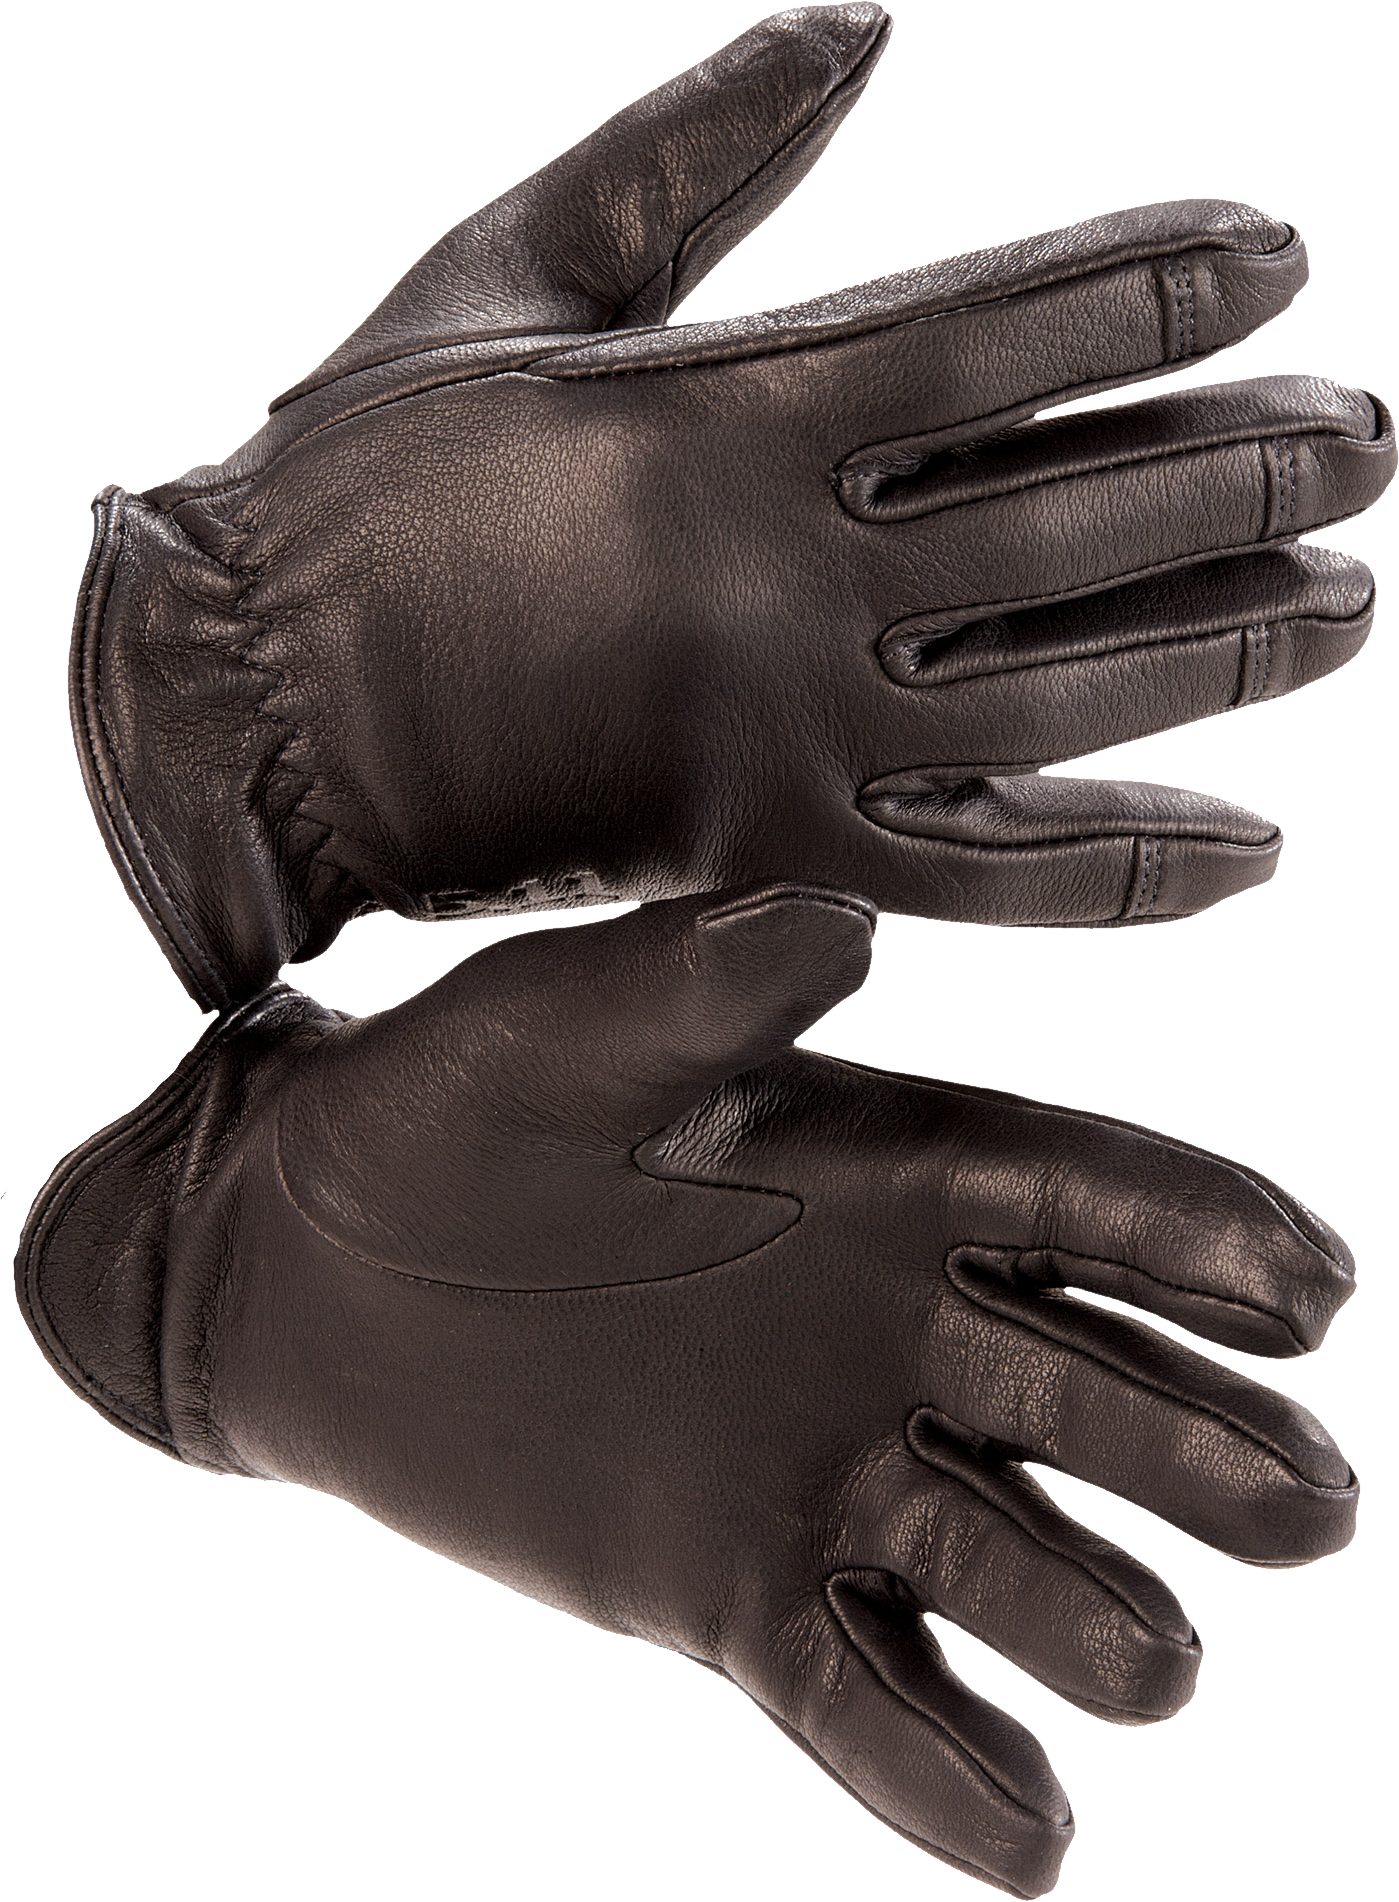 Leather Gloves Png Image - 5.11 Tactical Praetorian 2 Gloves - Black (1399x1902)